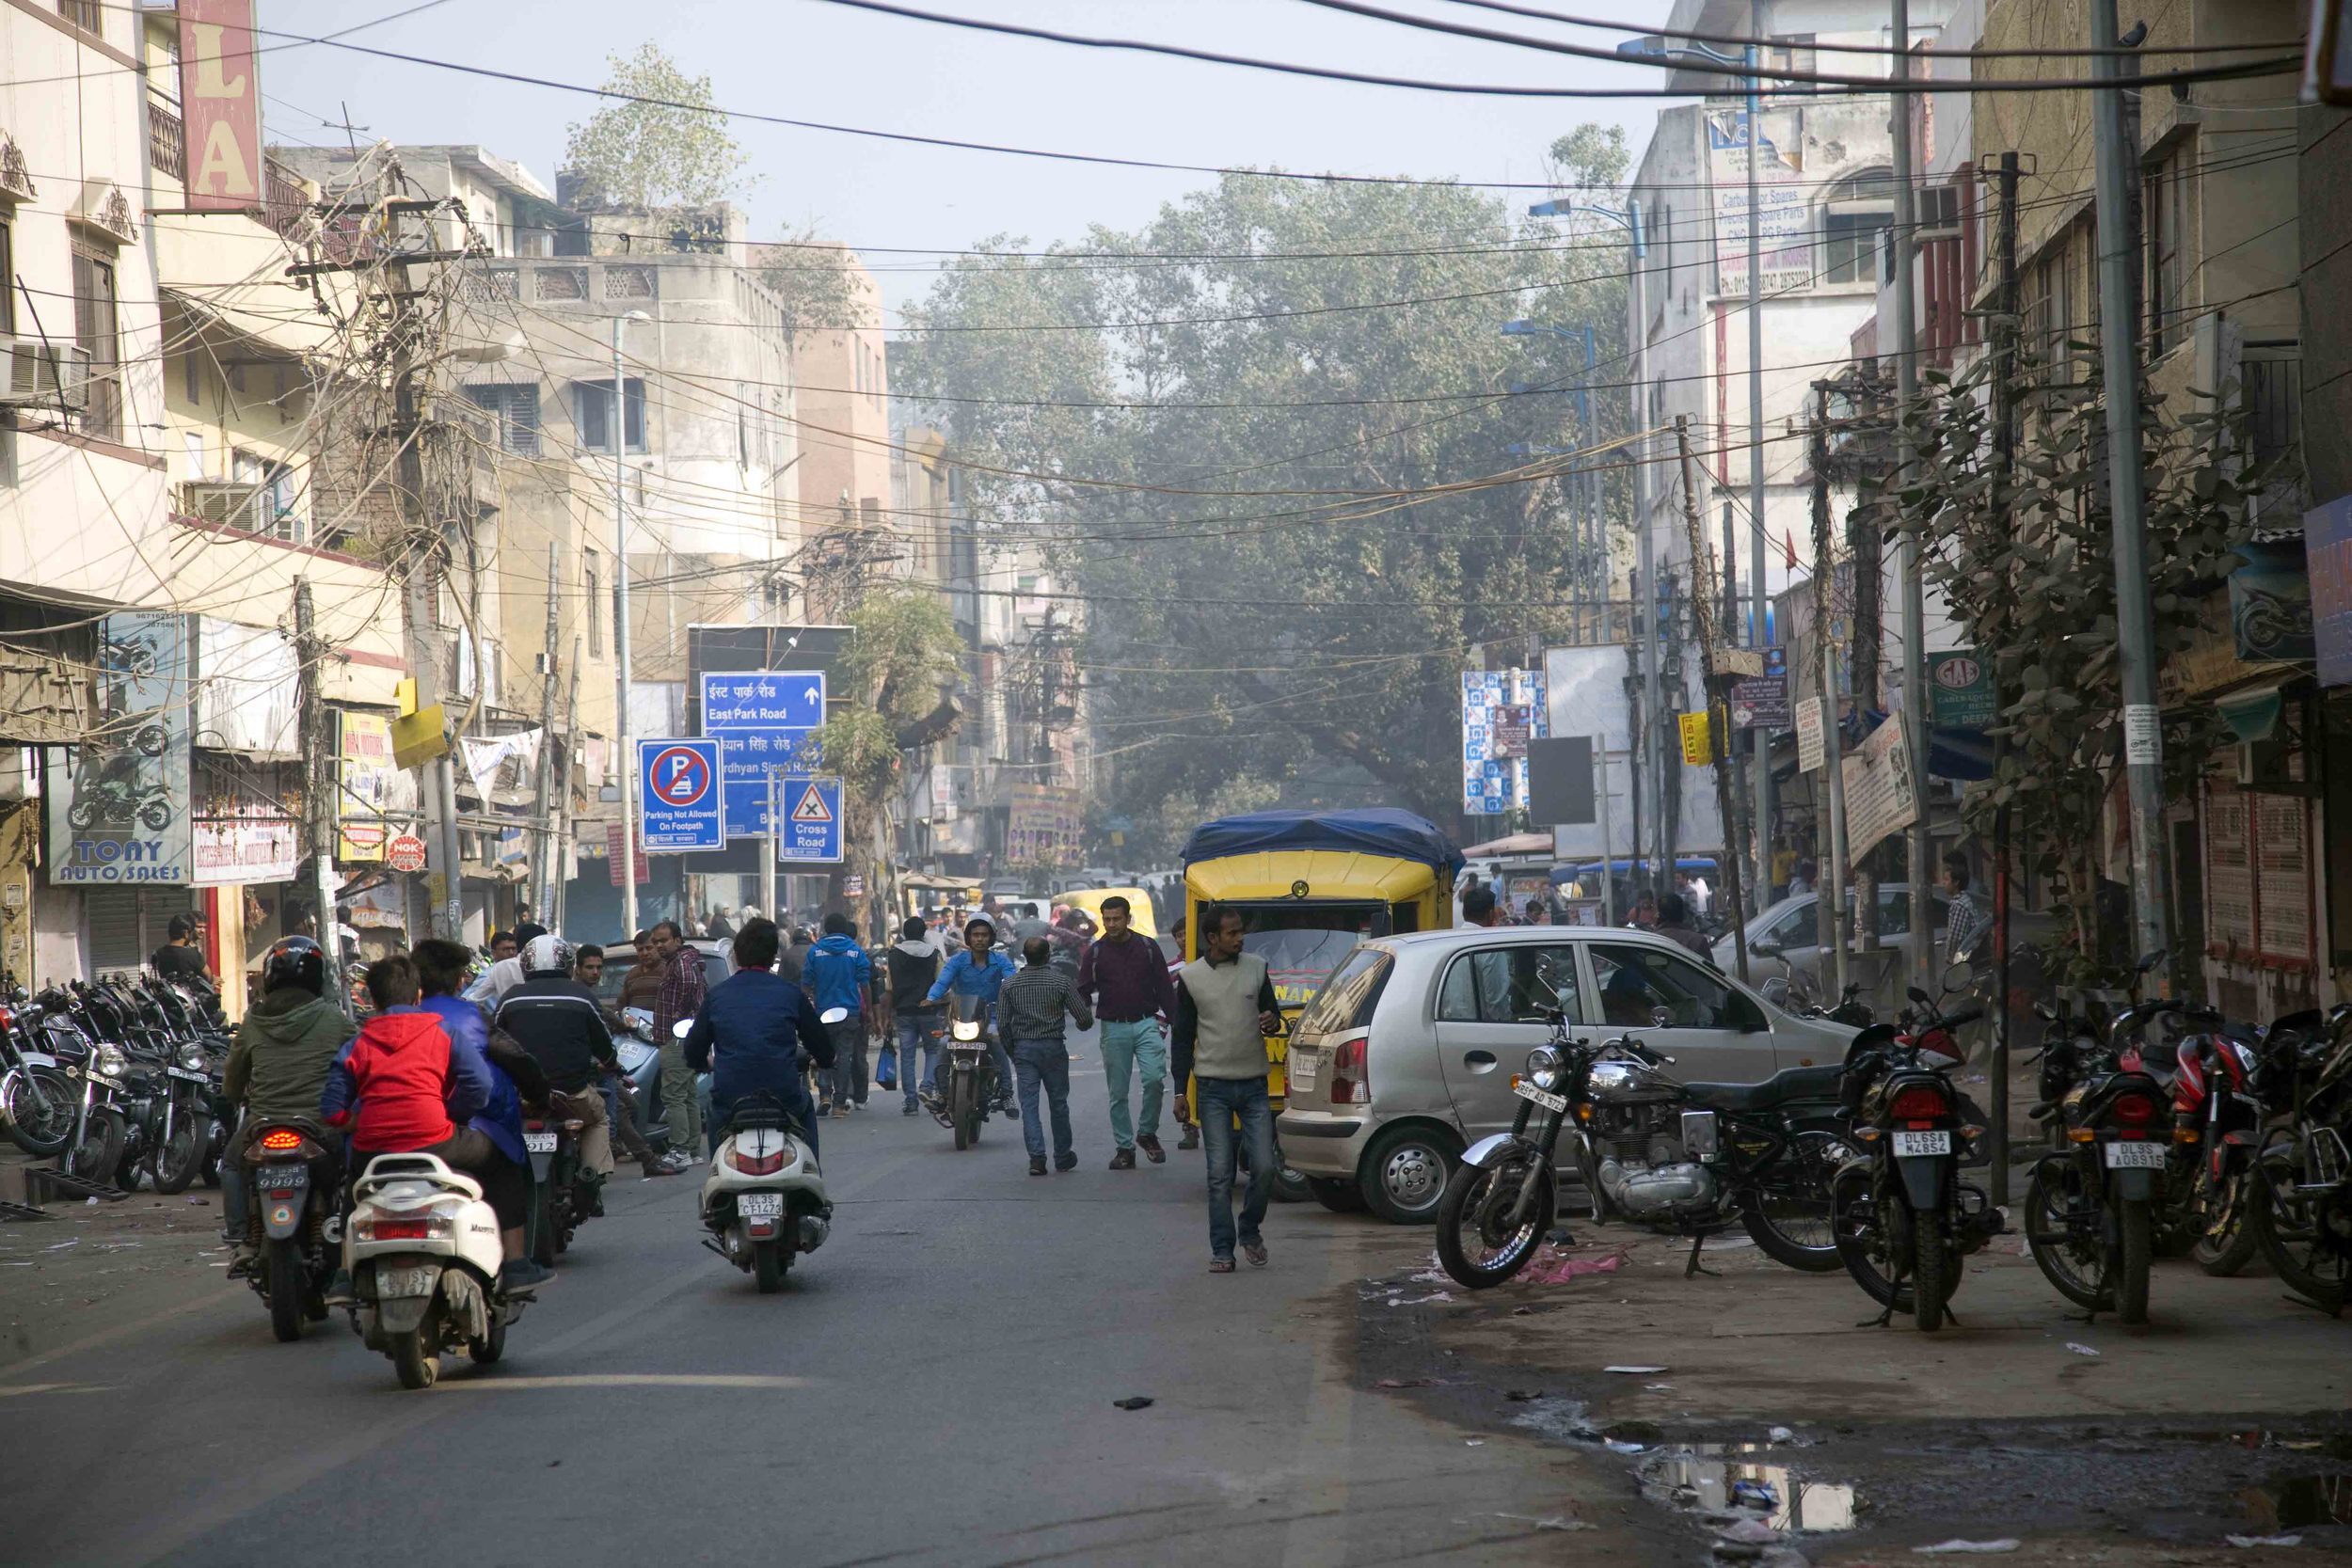 A-Delhi Streets 2.jpg